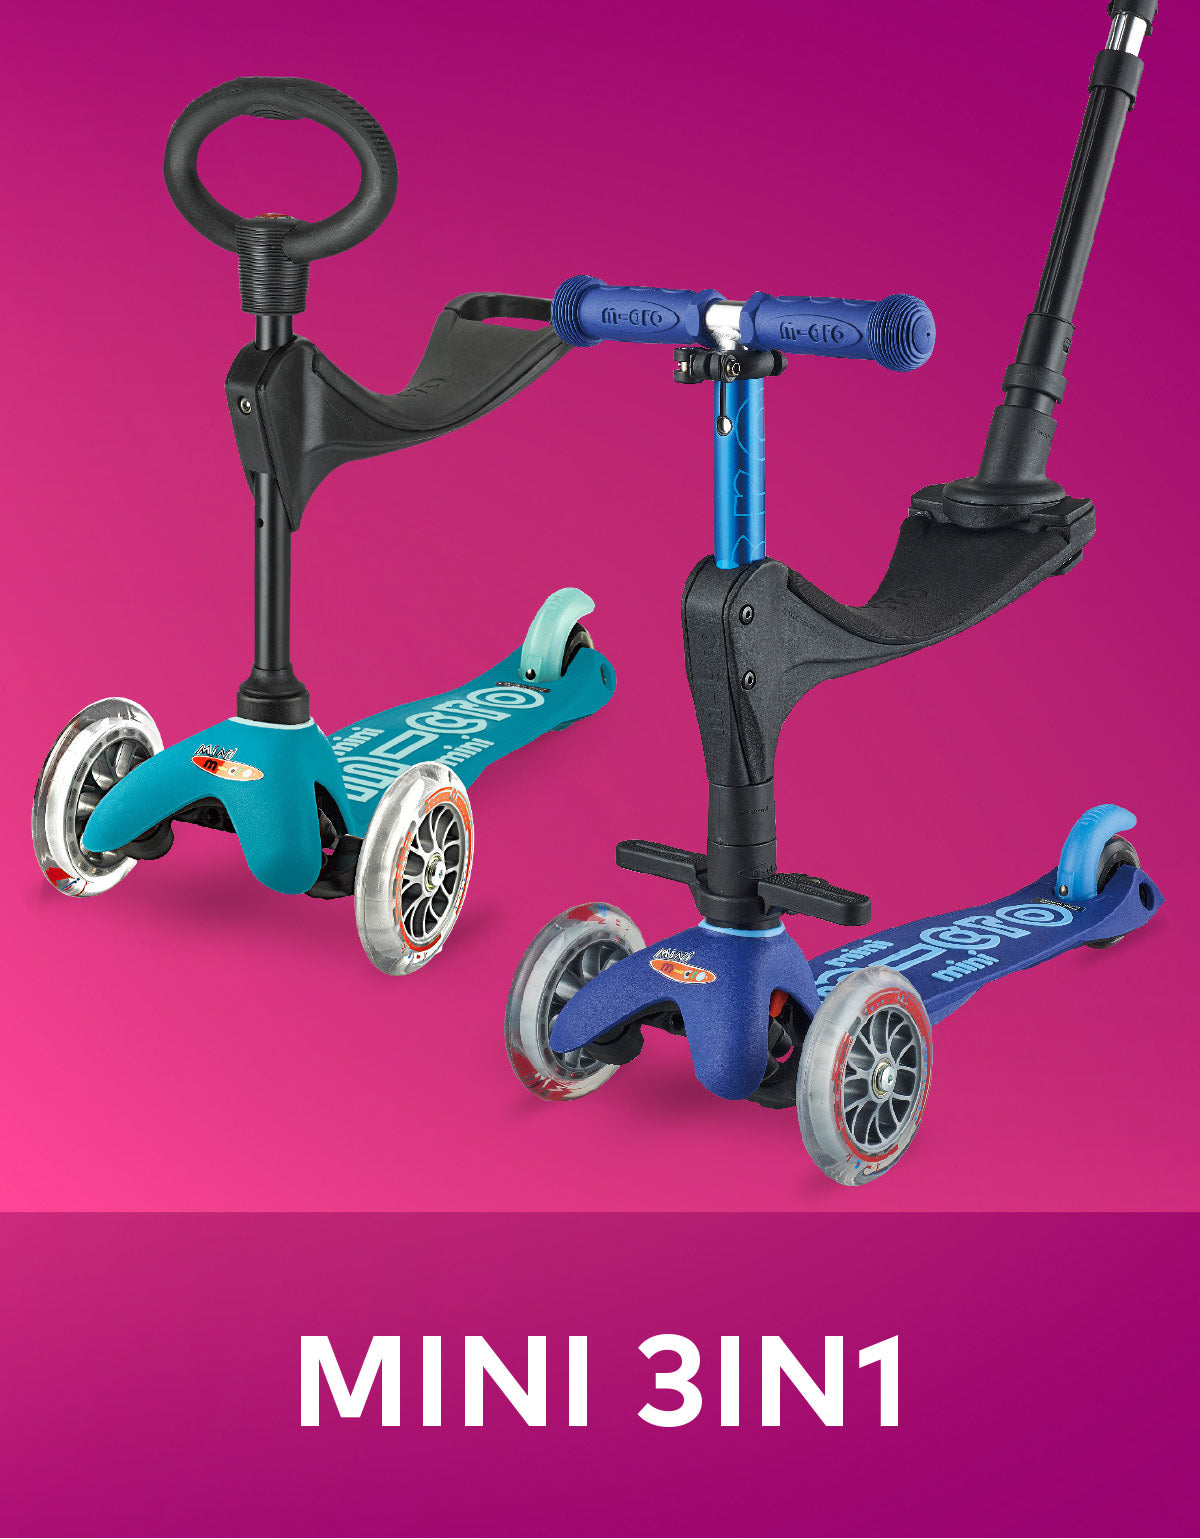 Mini Micro 3in1 Scooter Repair Videos